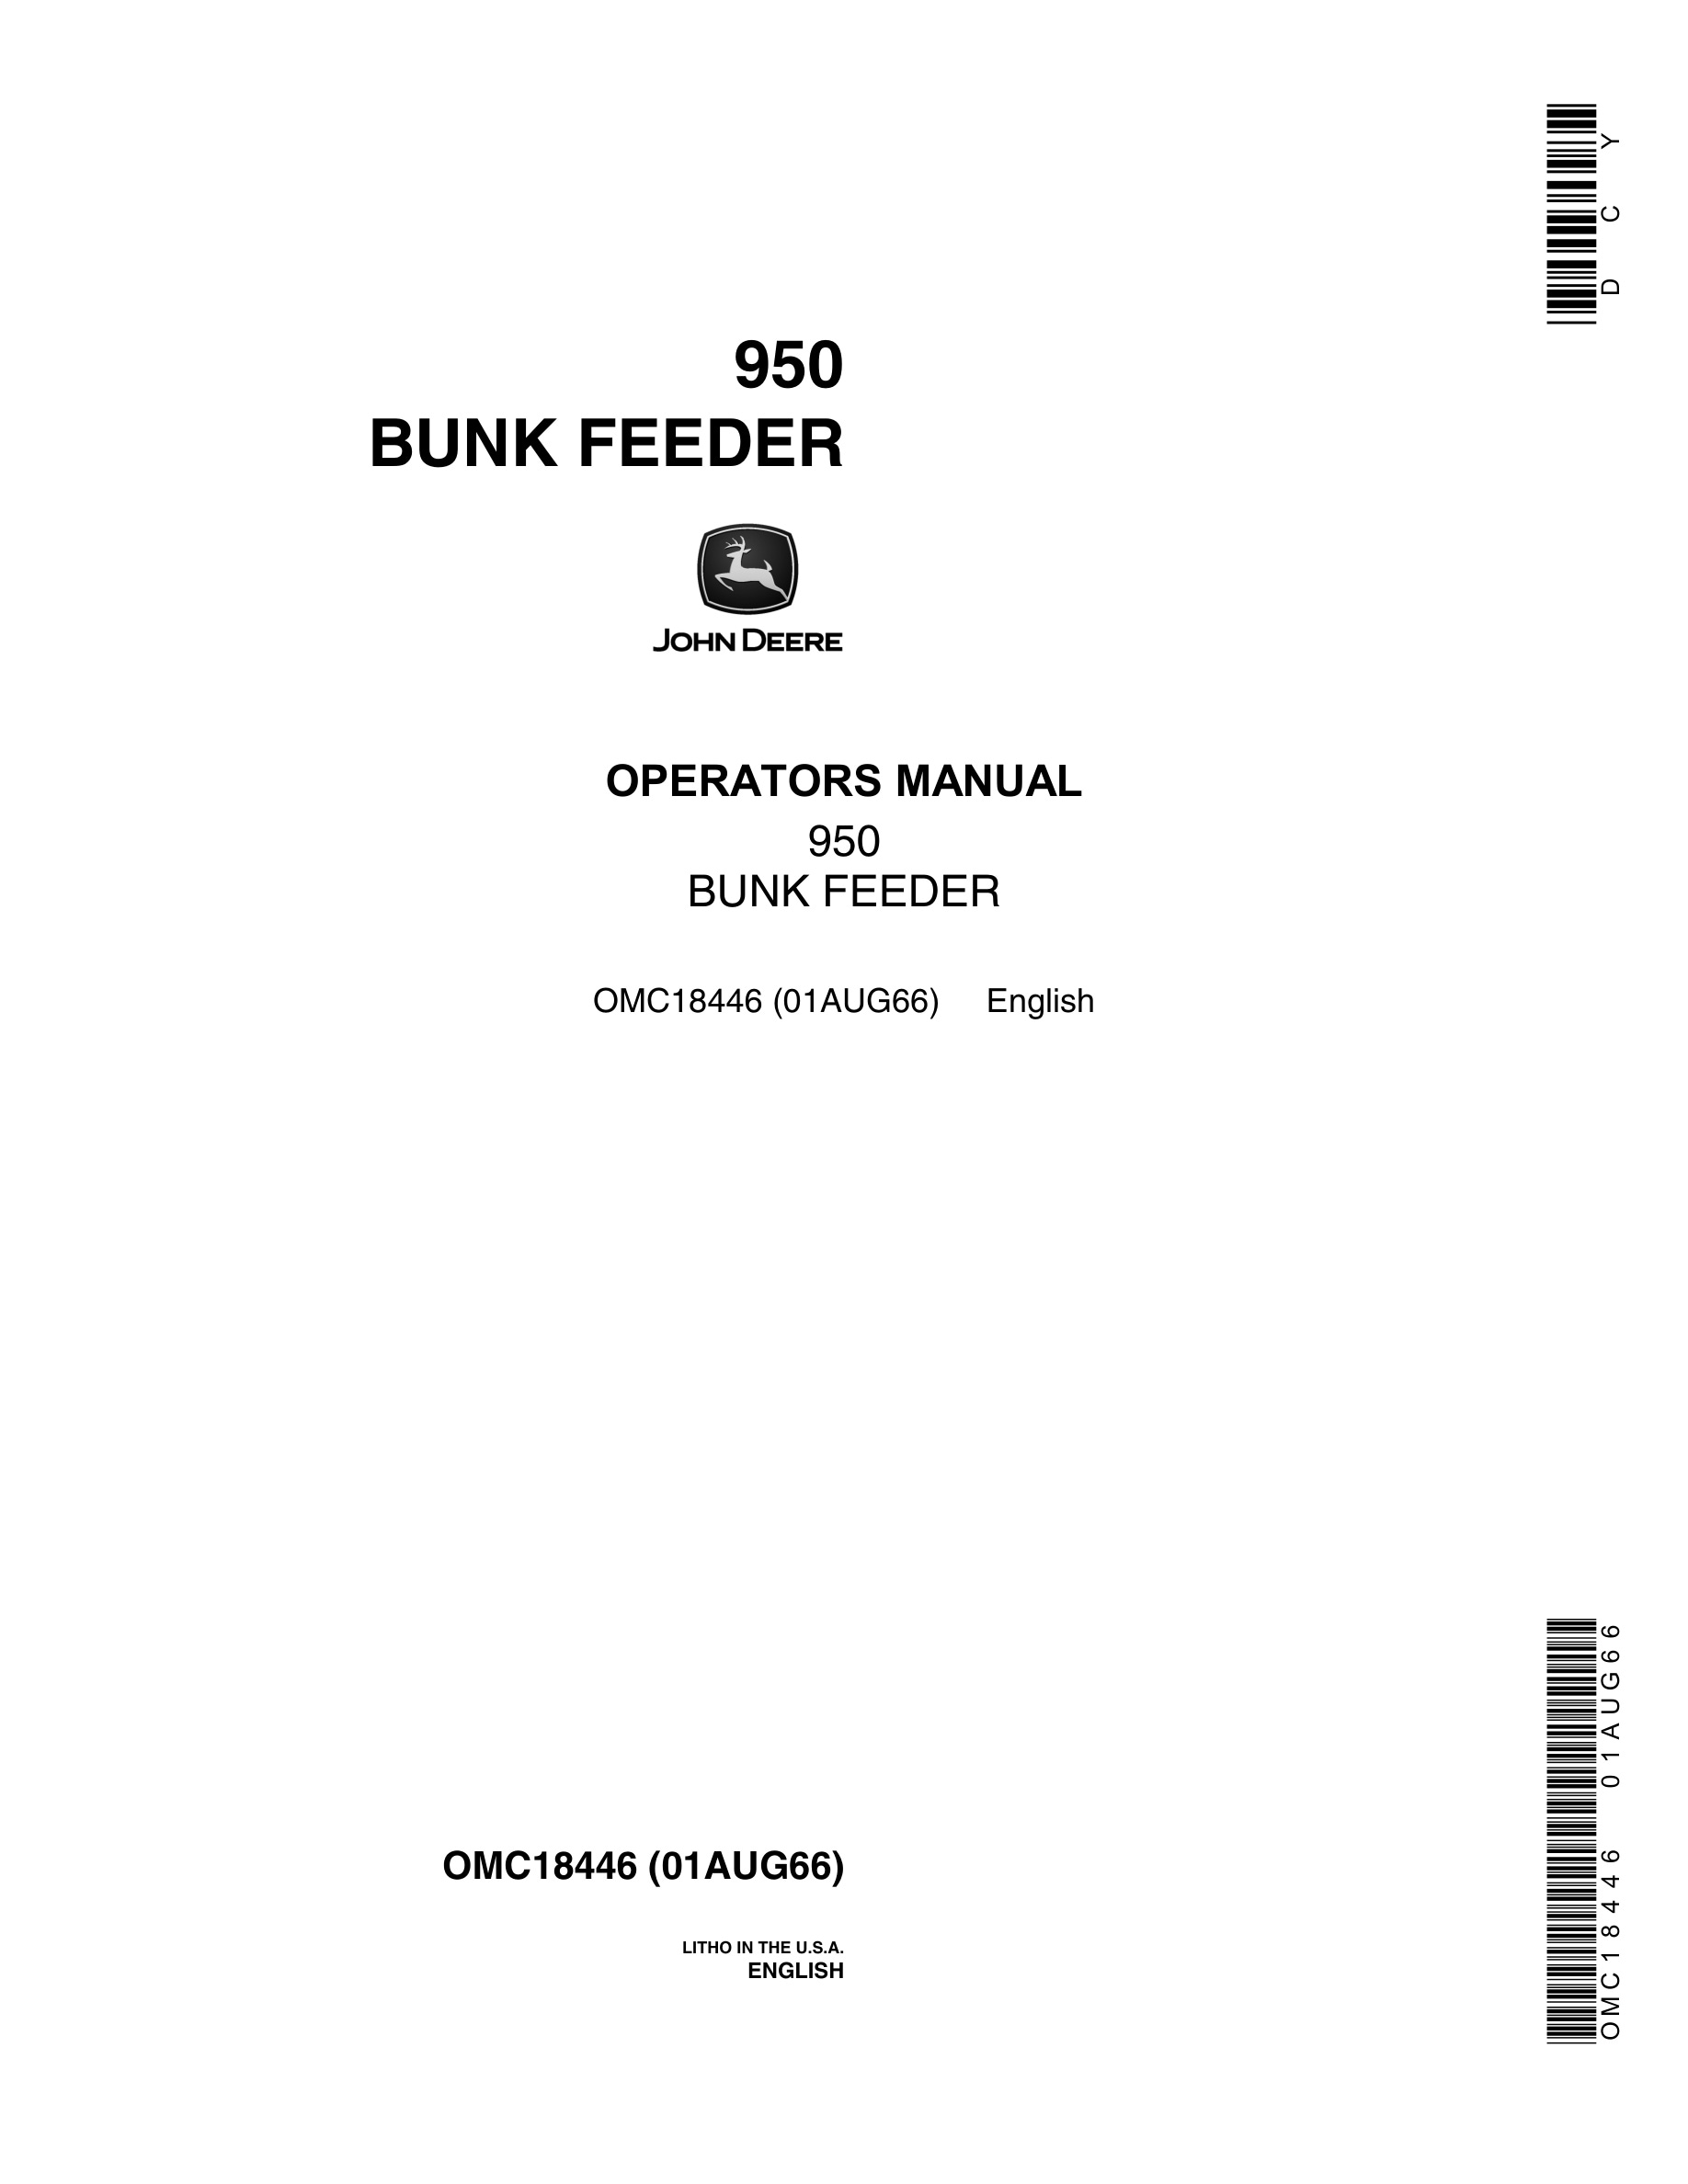 John Deere 950 BUNK FEEDER Operator Manual OMC18446-1